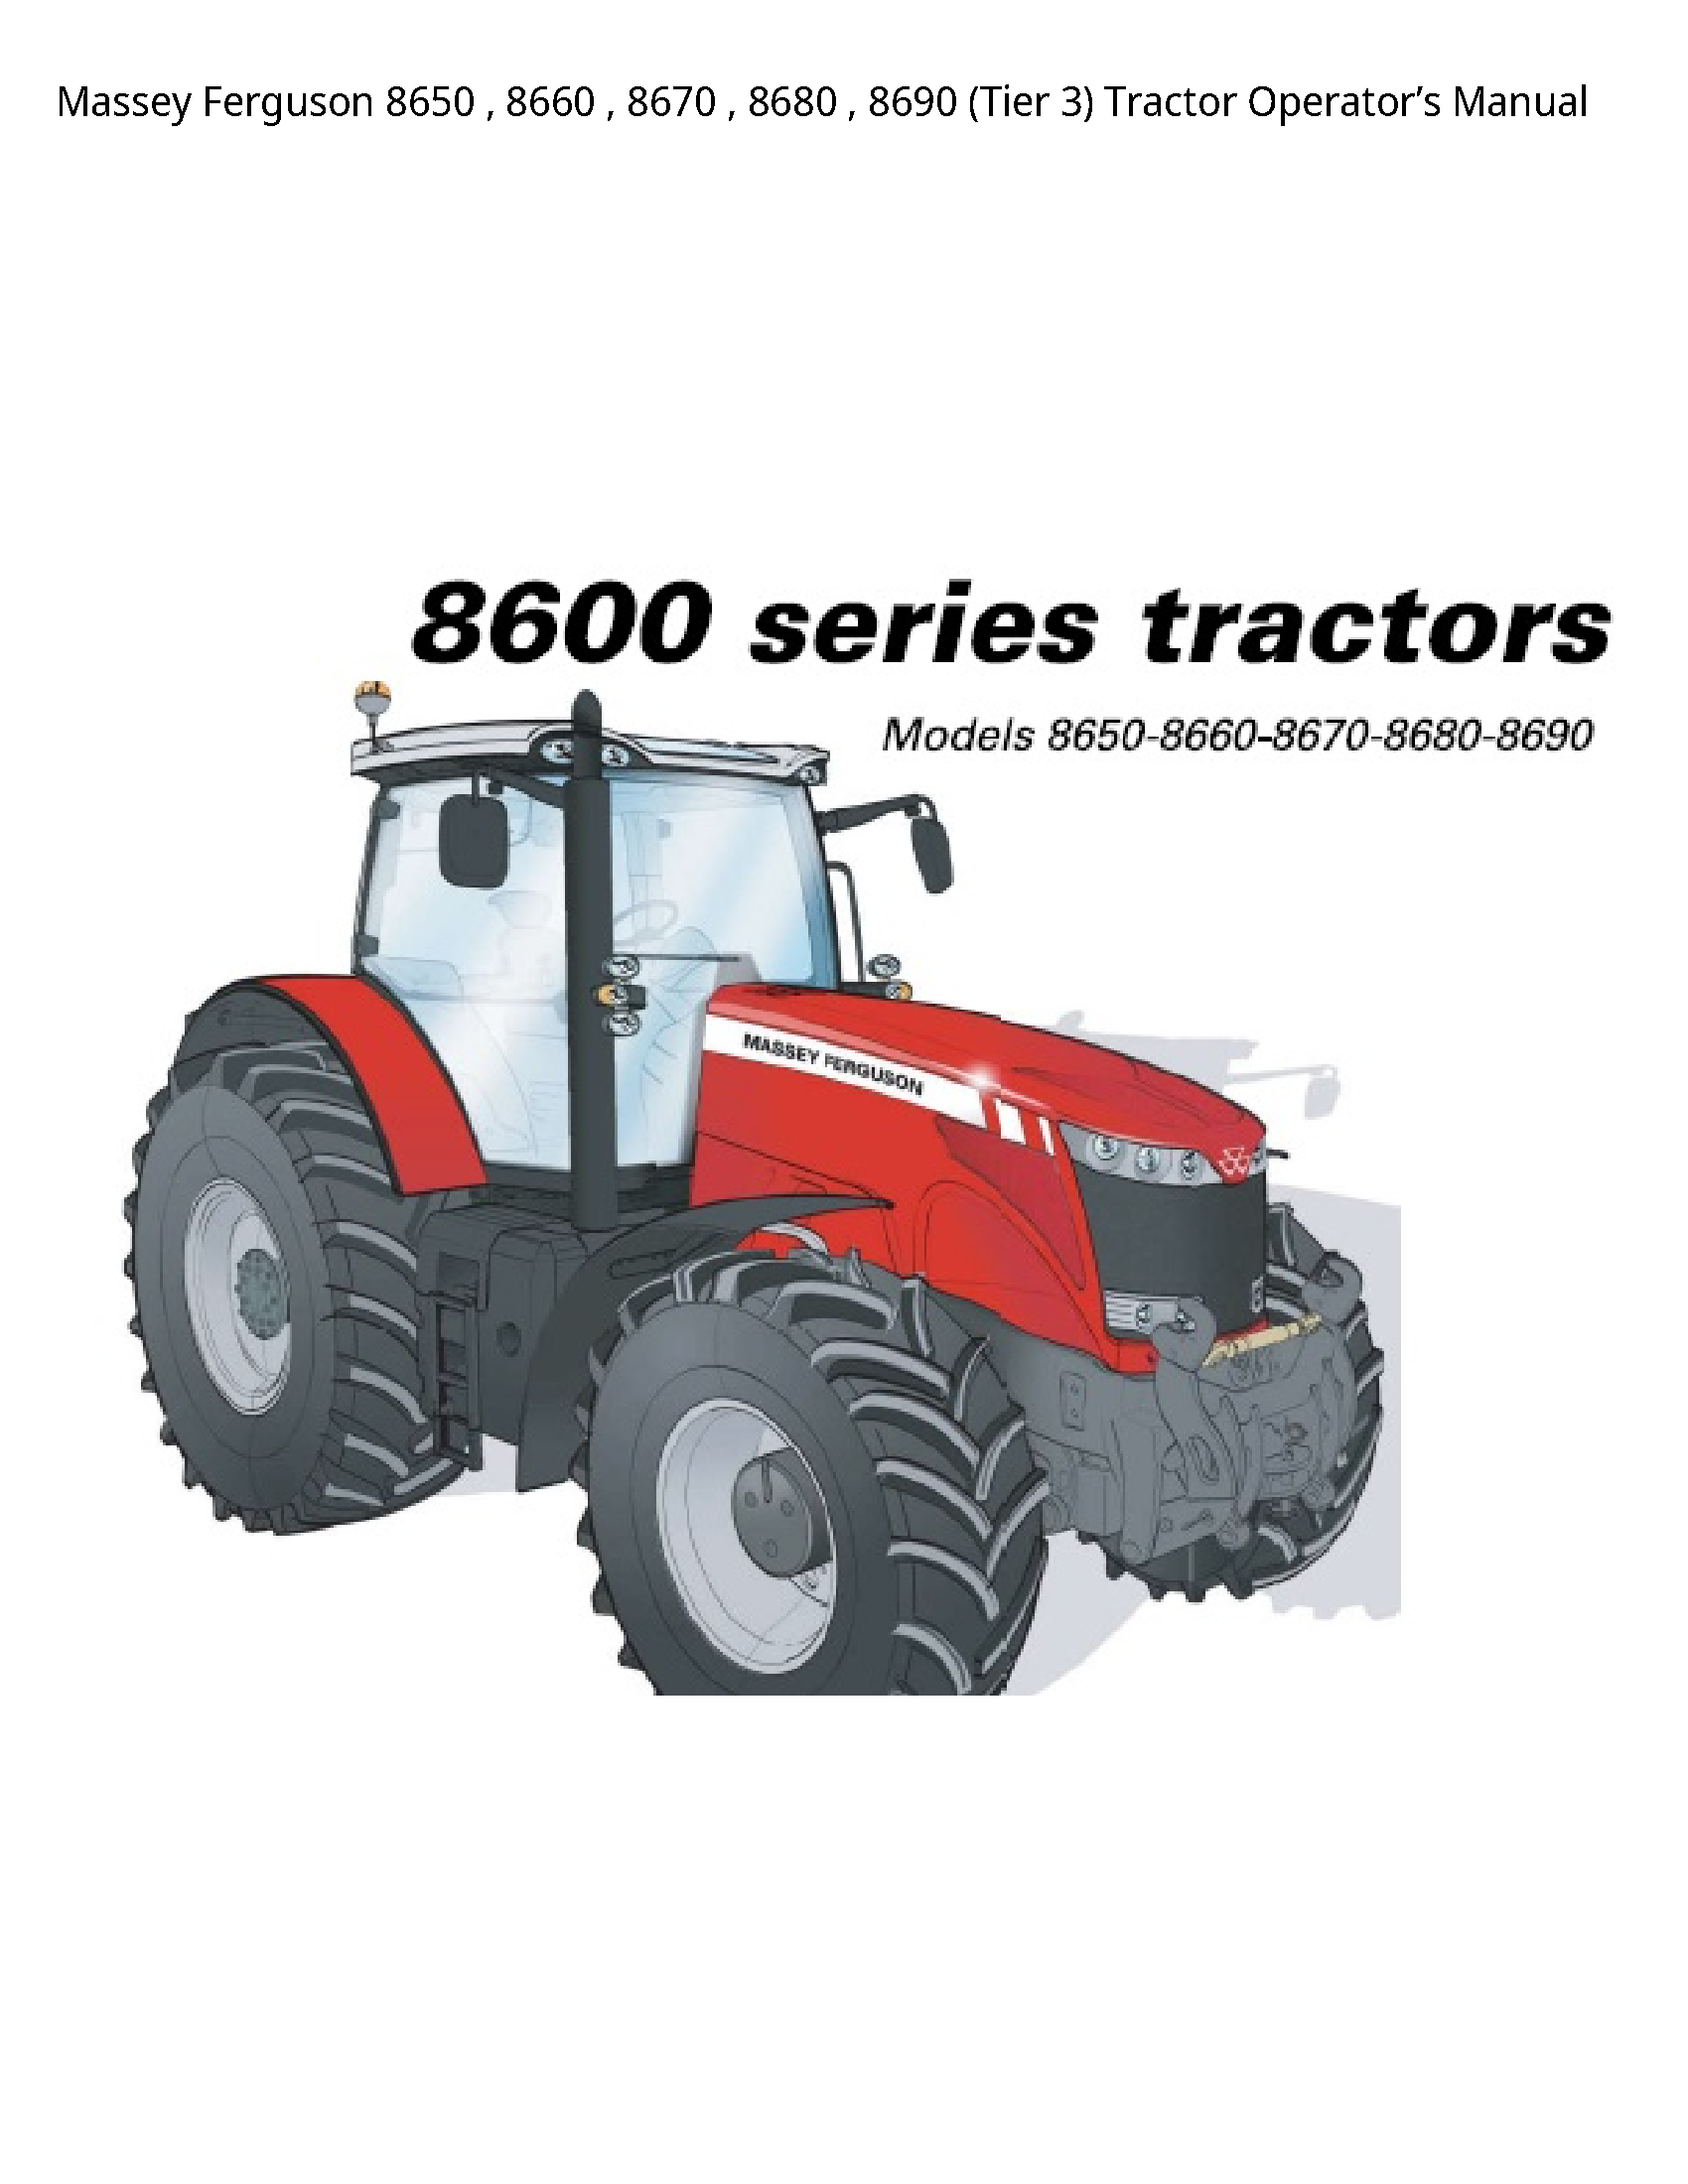 Massey Ferguson 8650 (Tier Tractor Operator’s manual